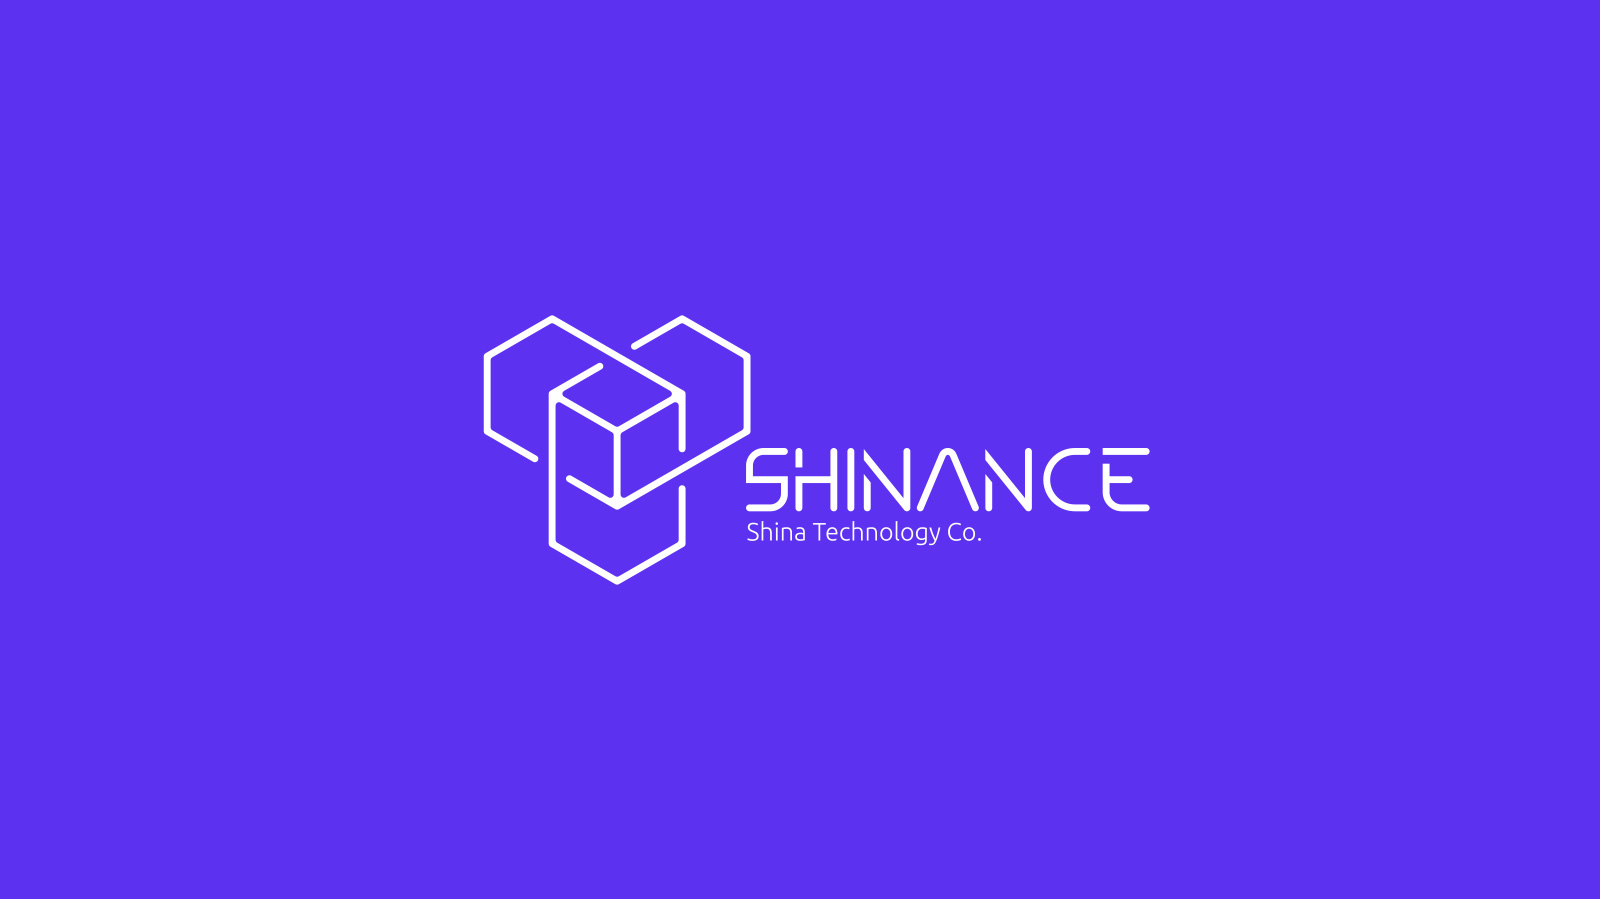 Shinance (6)